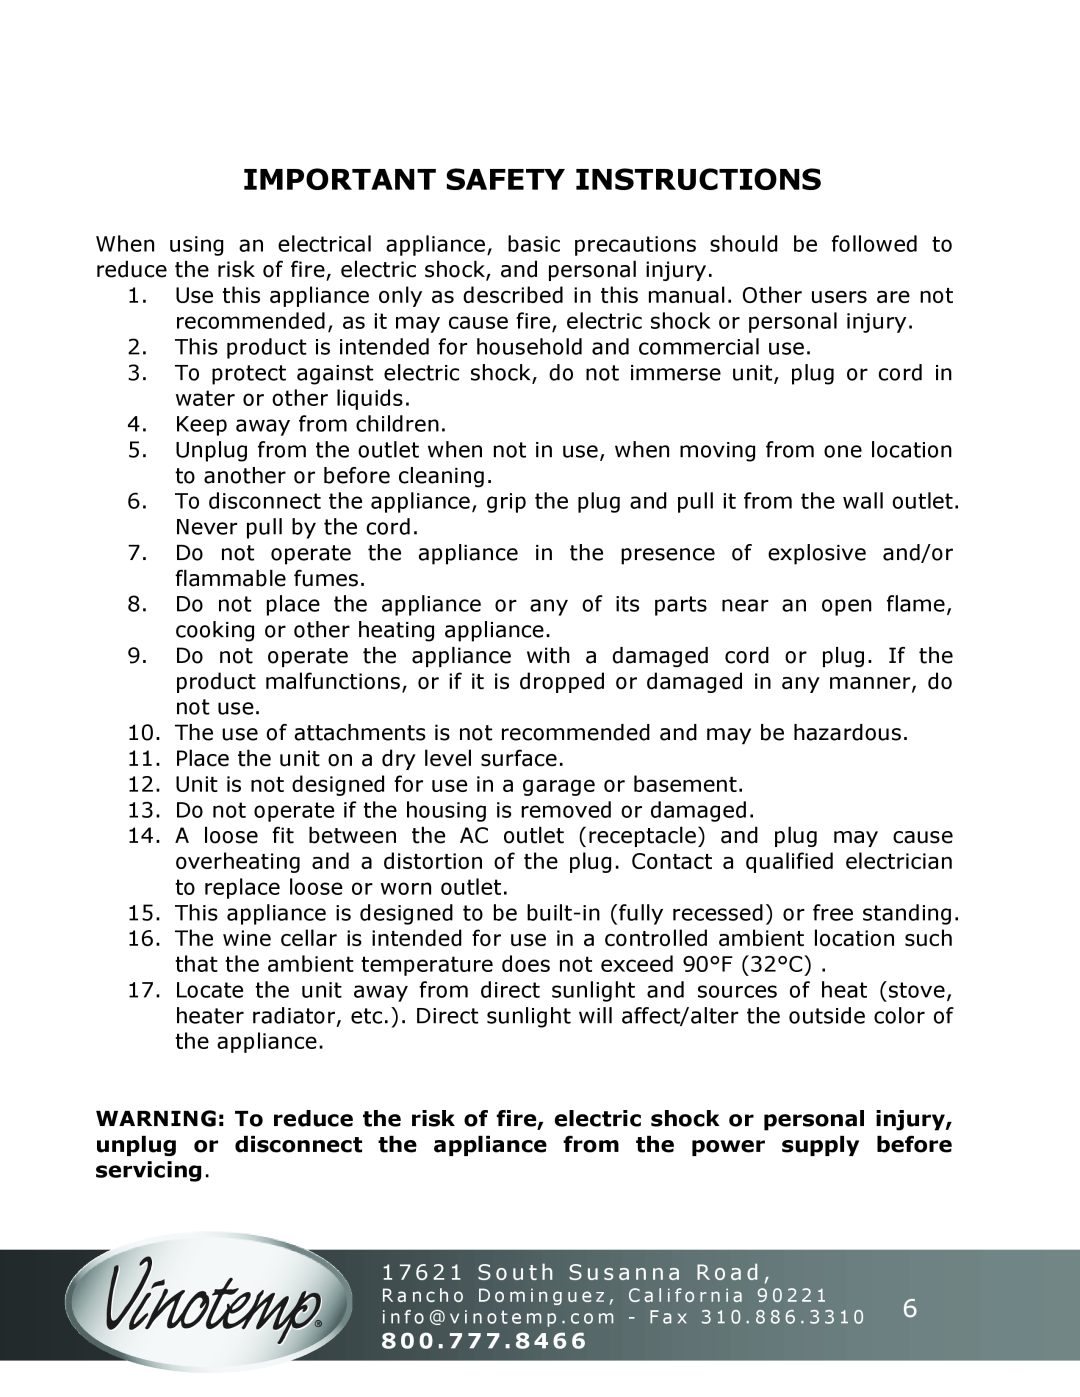 Vinotemp VT-50SBW instruction manual Important Safety Instructions, 1 7 6 2 1 S o u t h S u s a n n a R o a d, 800 